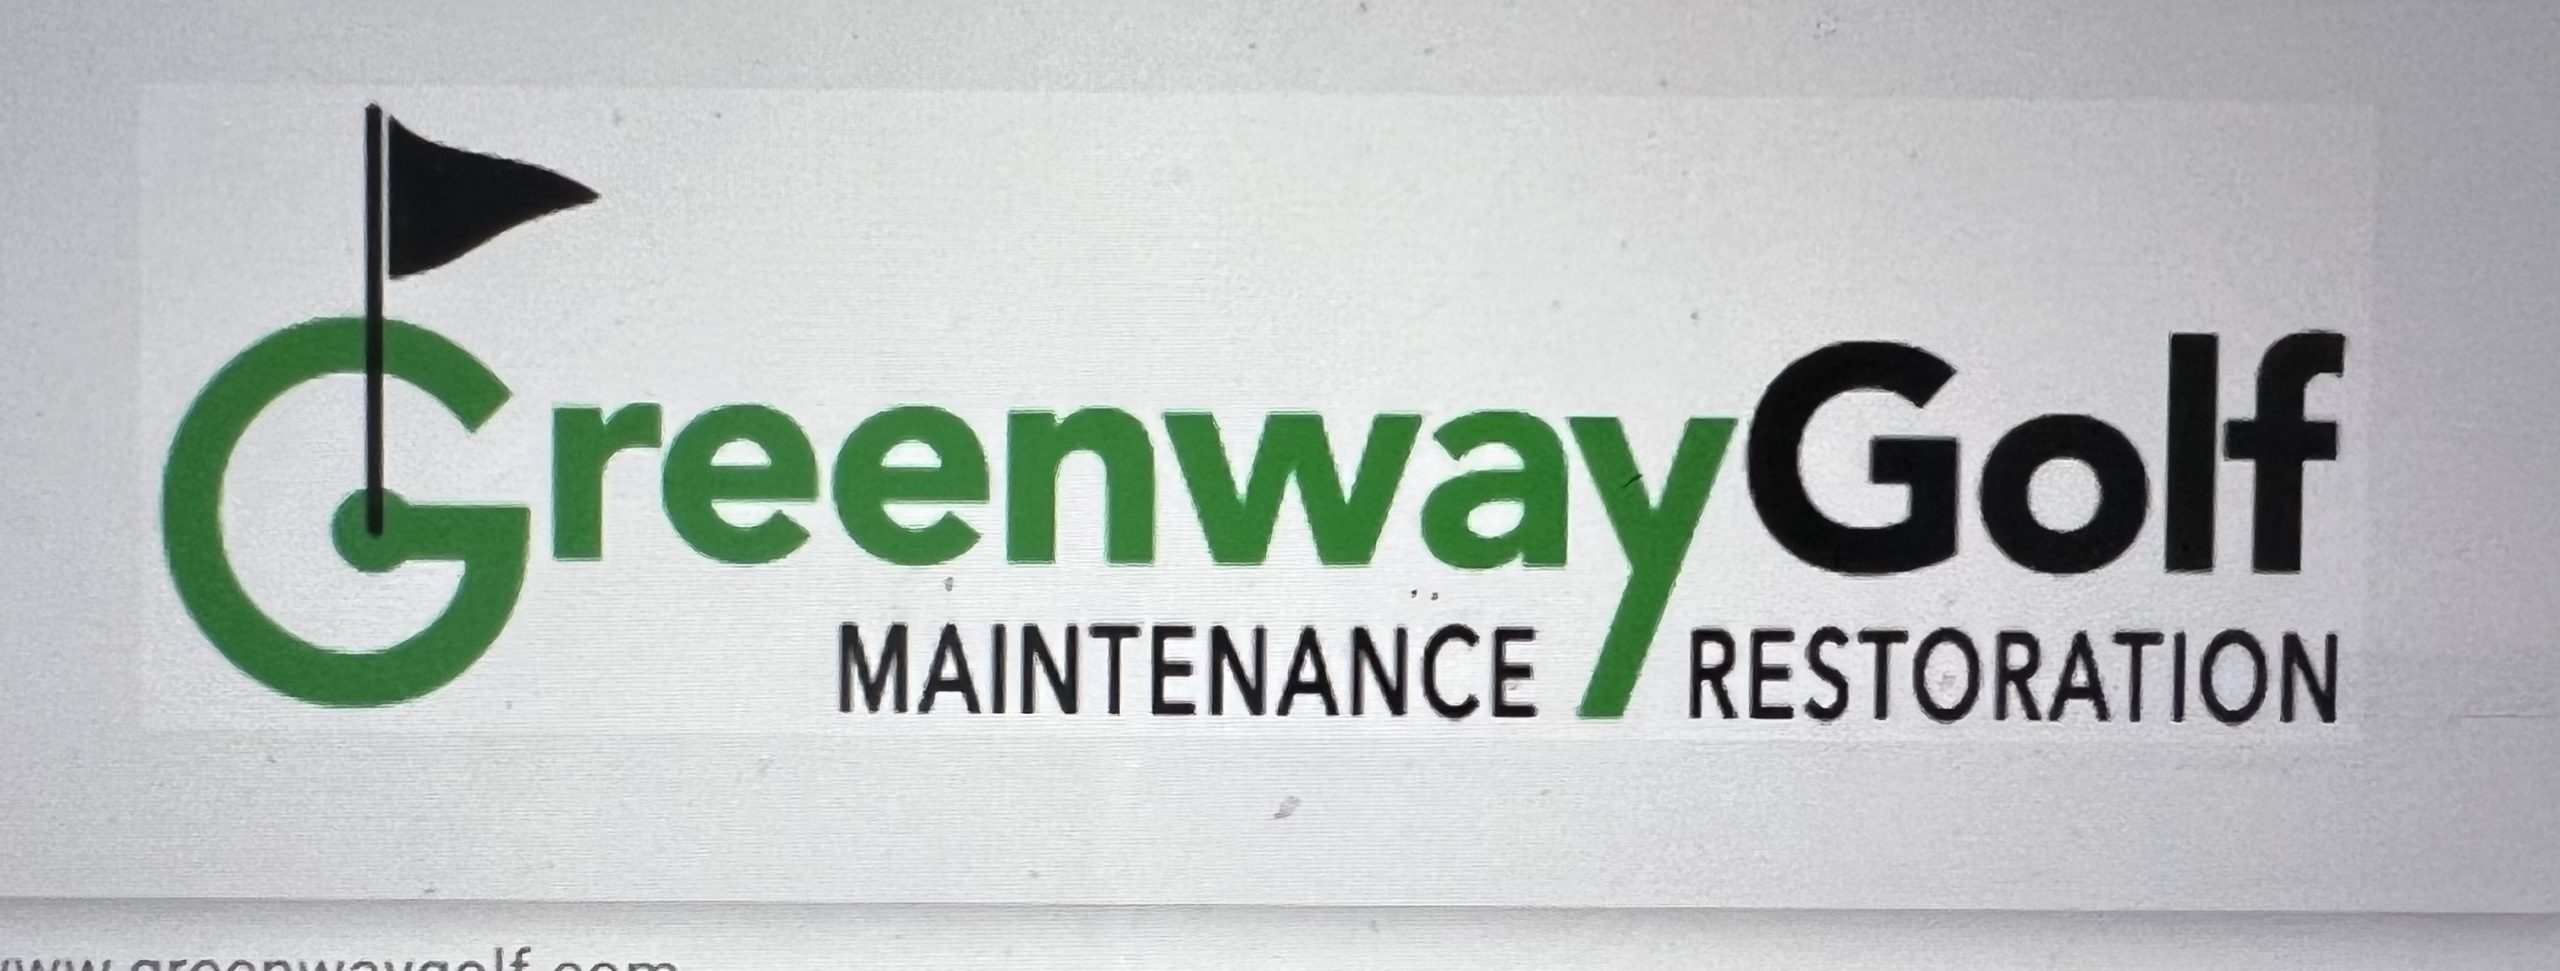 Greenway Golf Associates